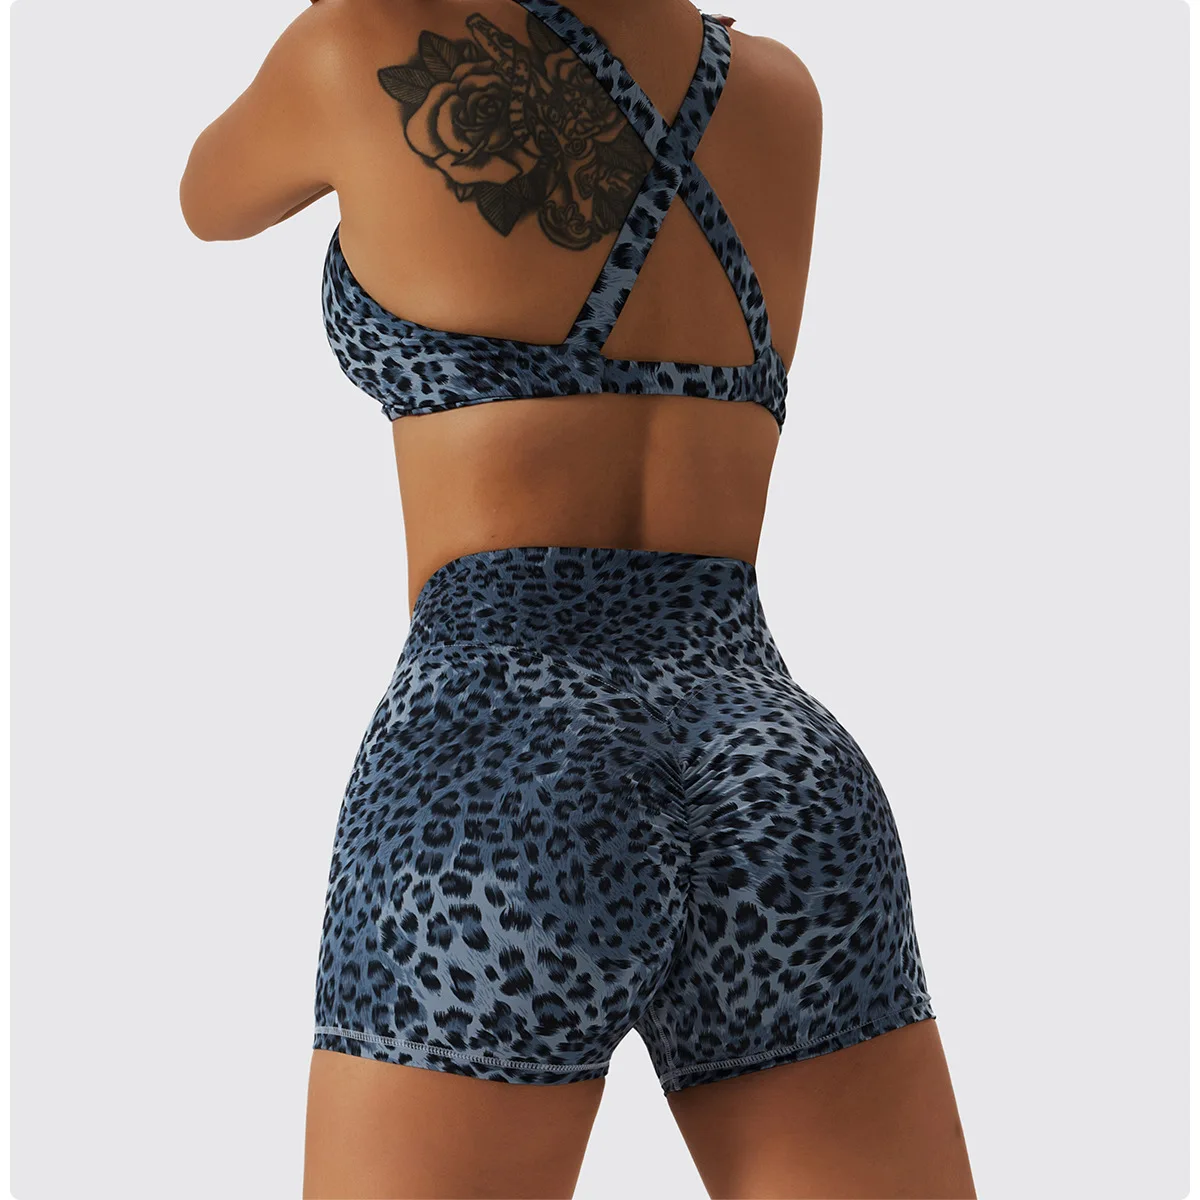 YIYI Twist Sexy High Impact Yoga Bra Leopard Printing Comfortable Sports Tops Breathable High Elastic Gym Bra For Women